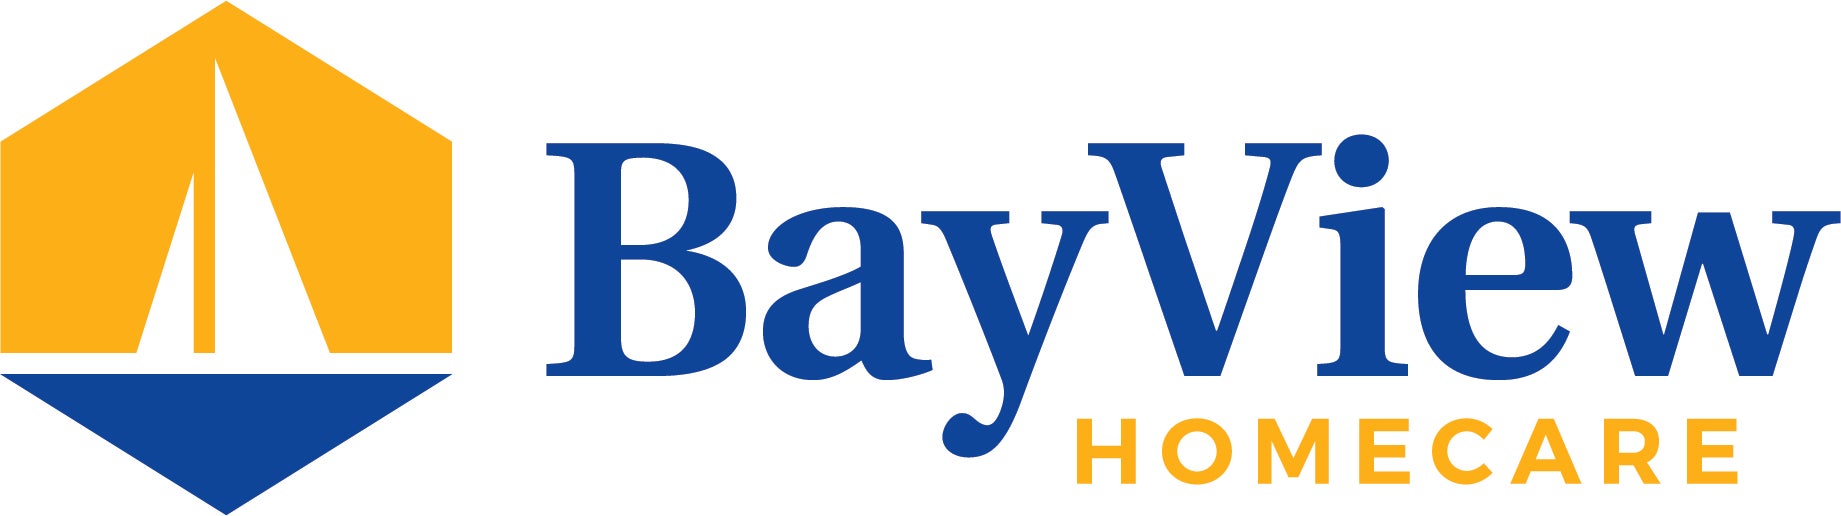 Bayview HomeCare